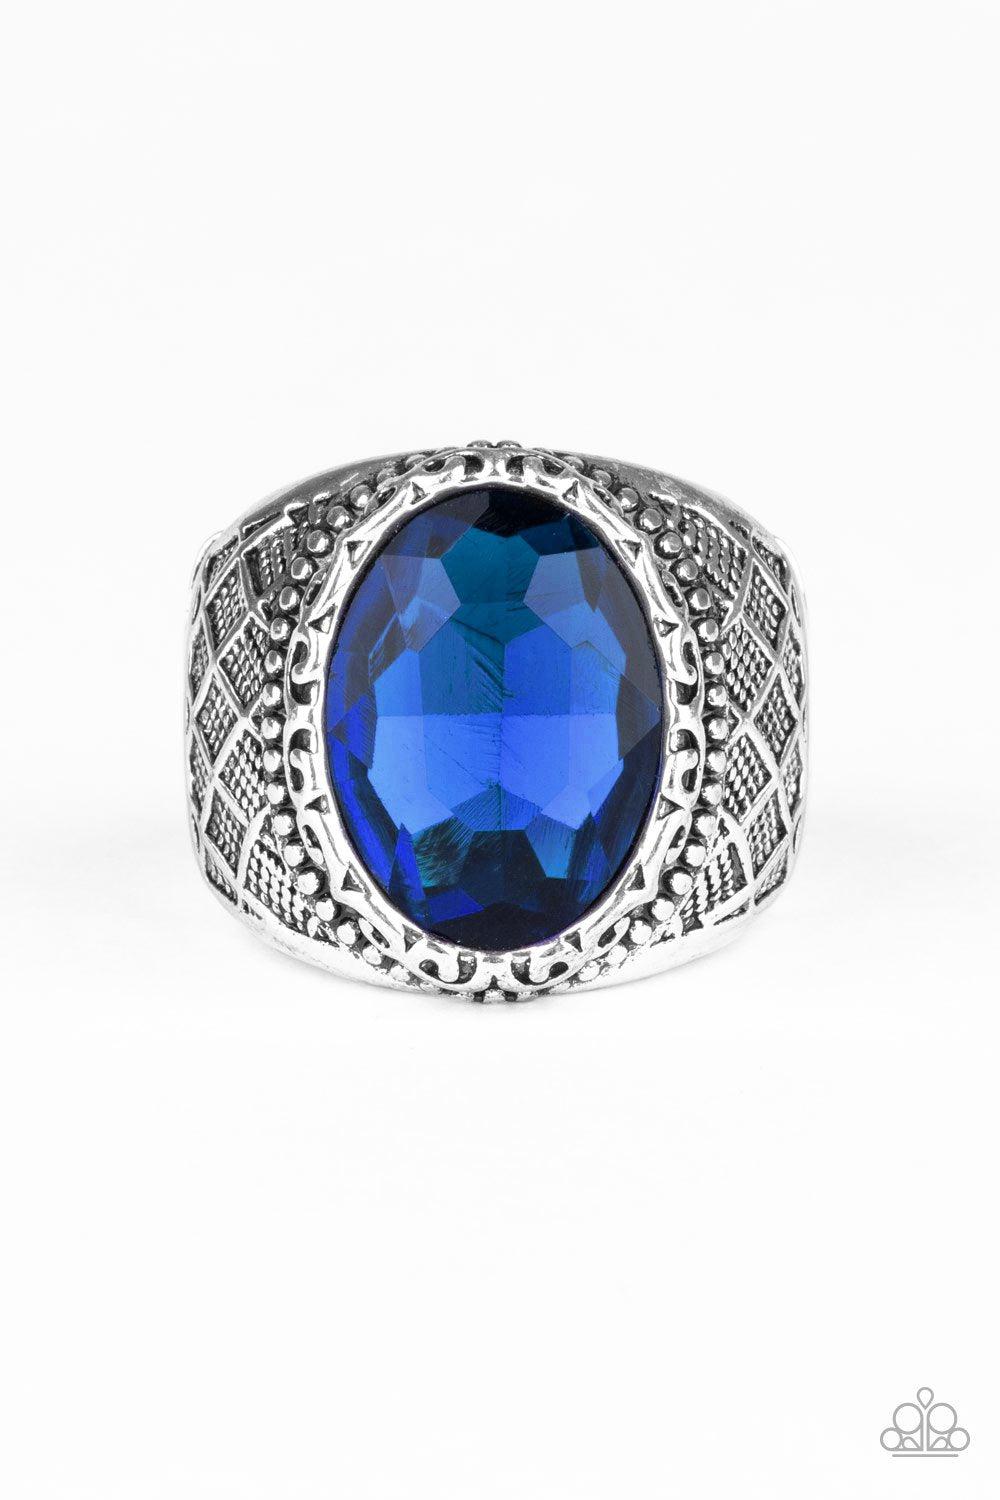 Pro Bowl Men's Blue Rhinestone Ring - Paparazzi Accessories- lightbox - CarasShop.com - $5 Jewelry by Cara Jewels